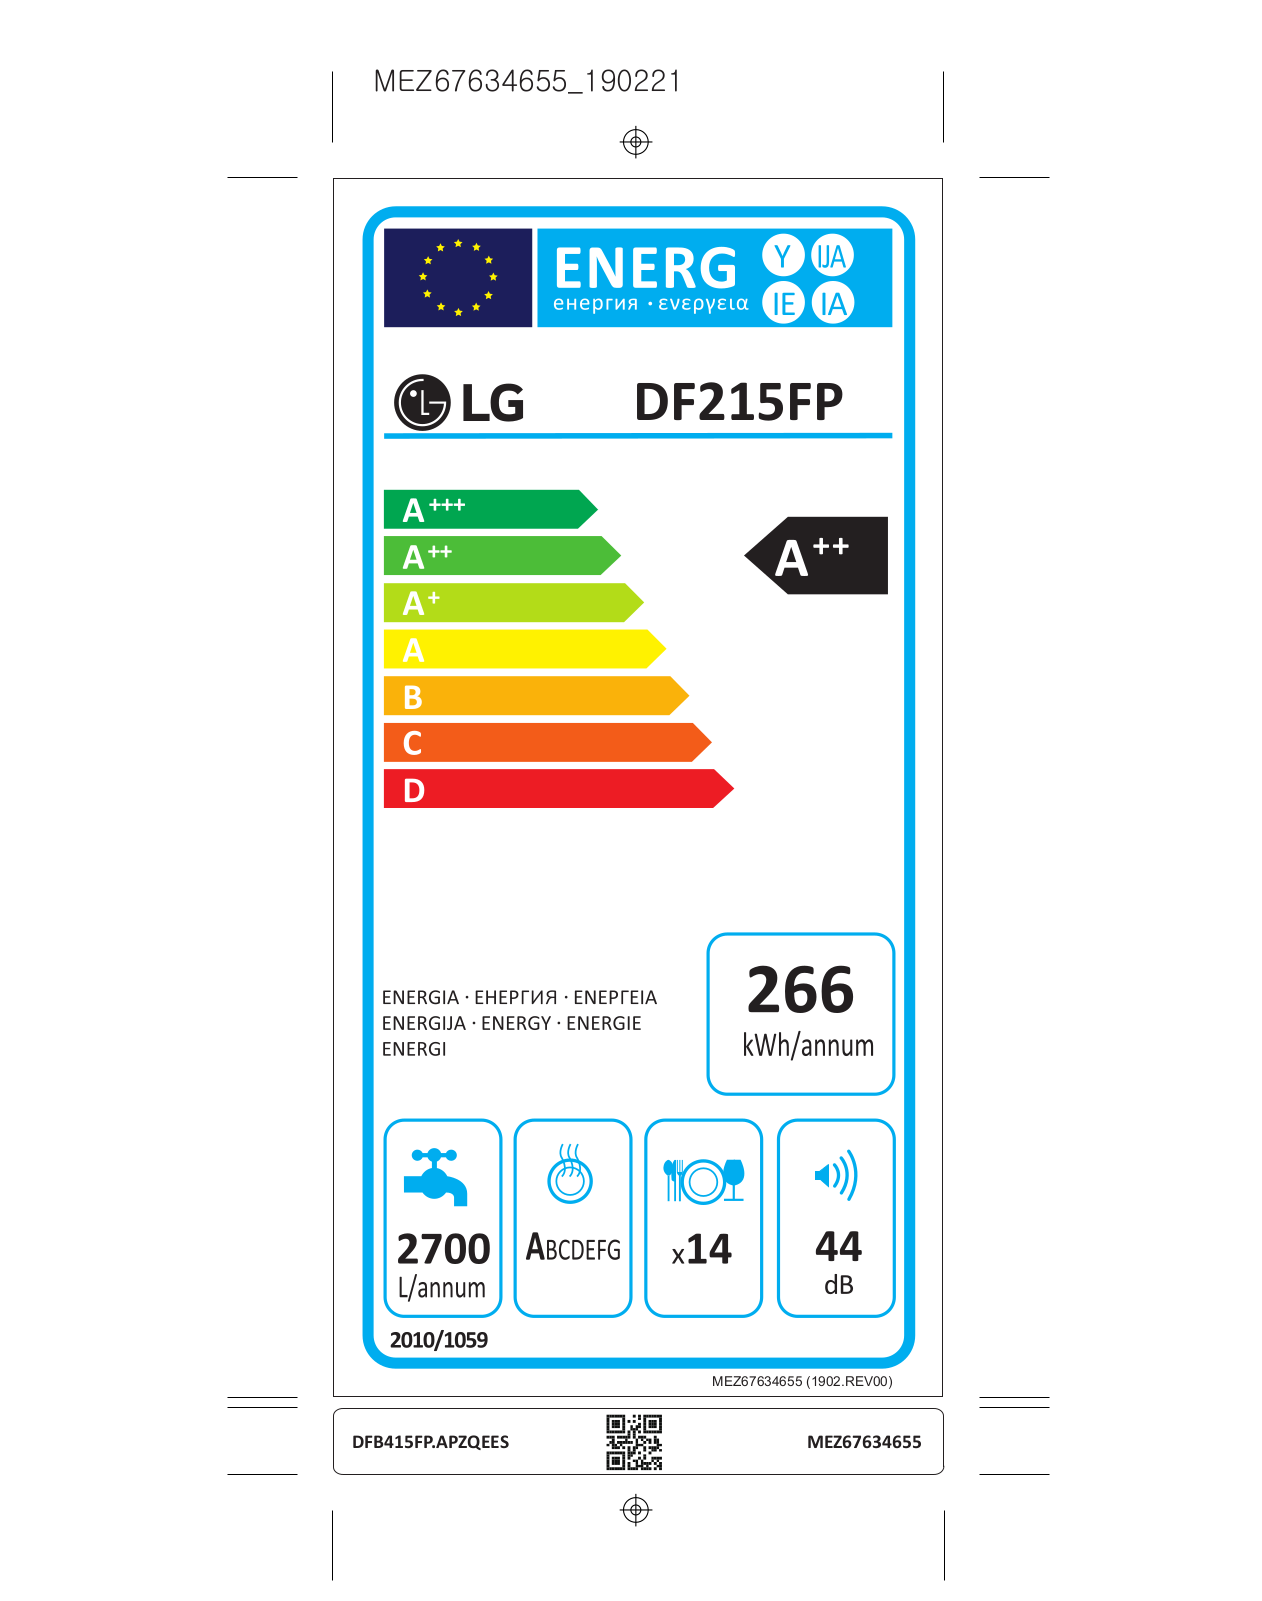 LG DF215FP Energy label